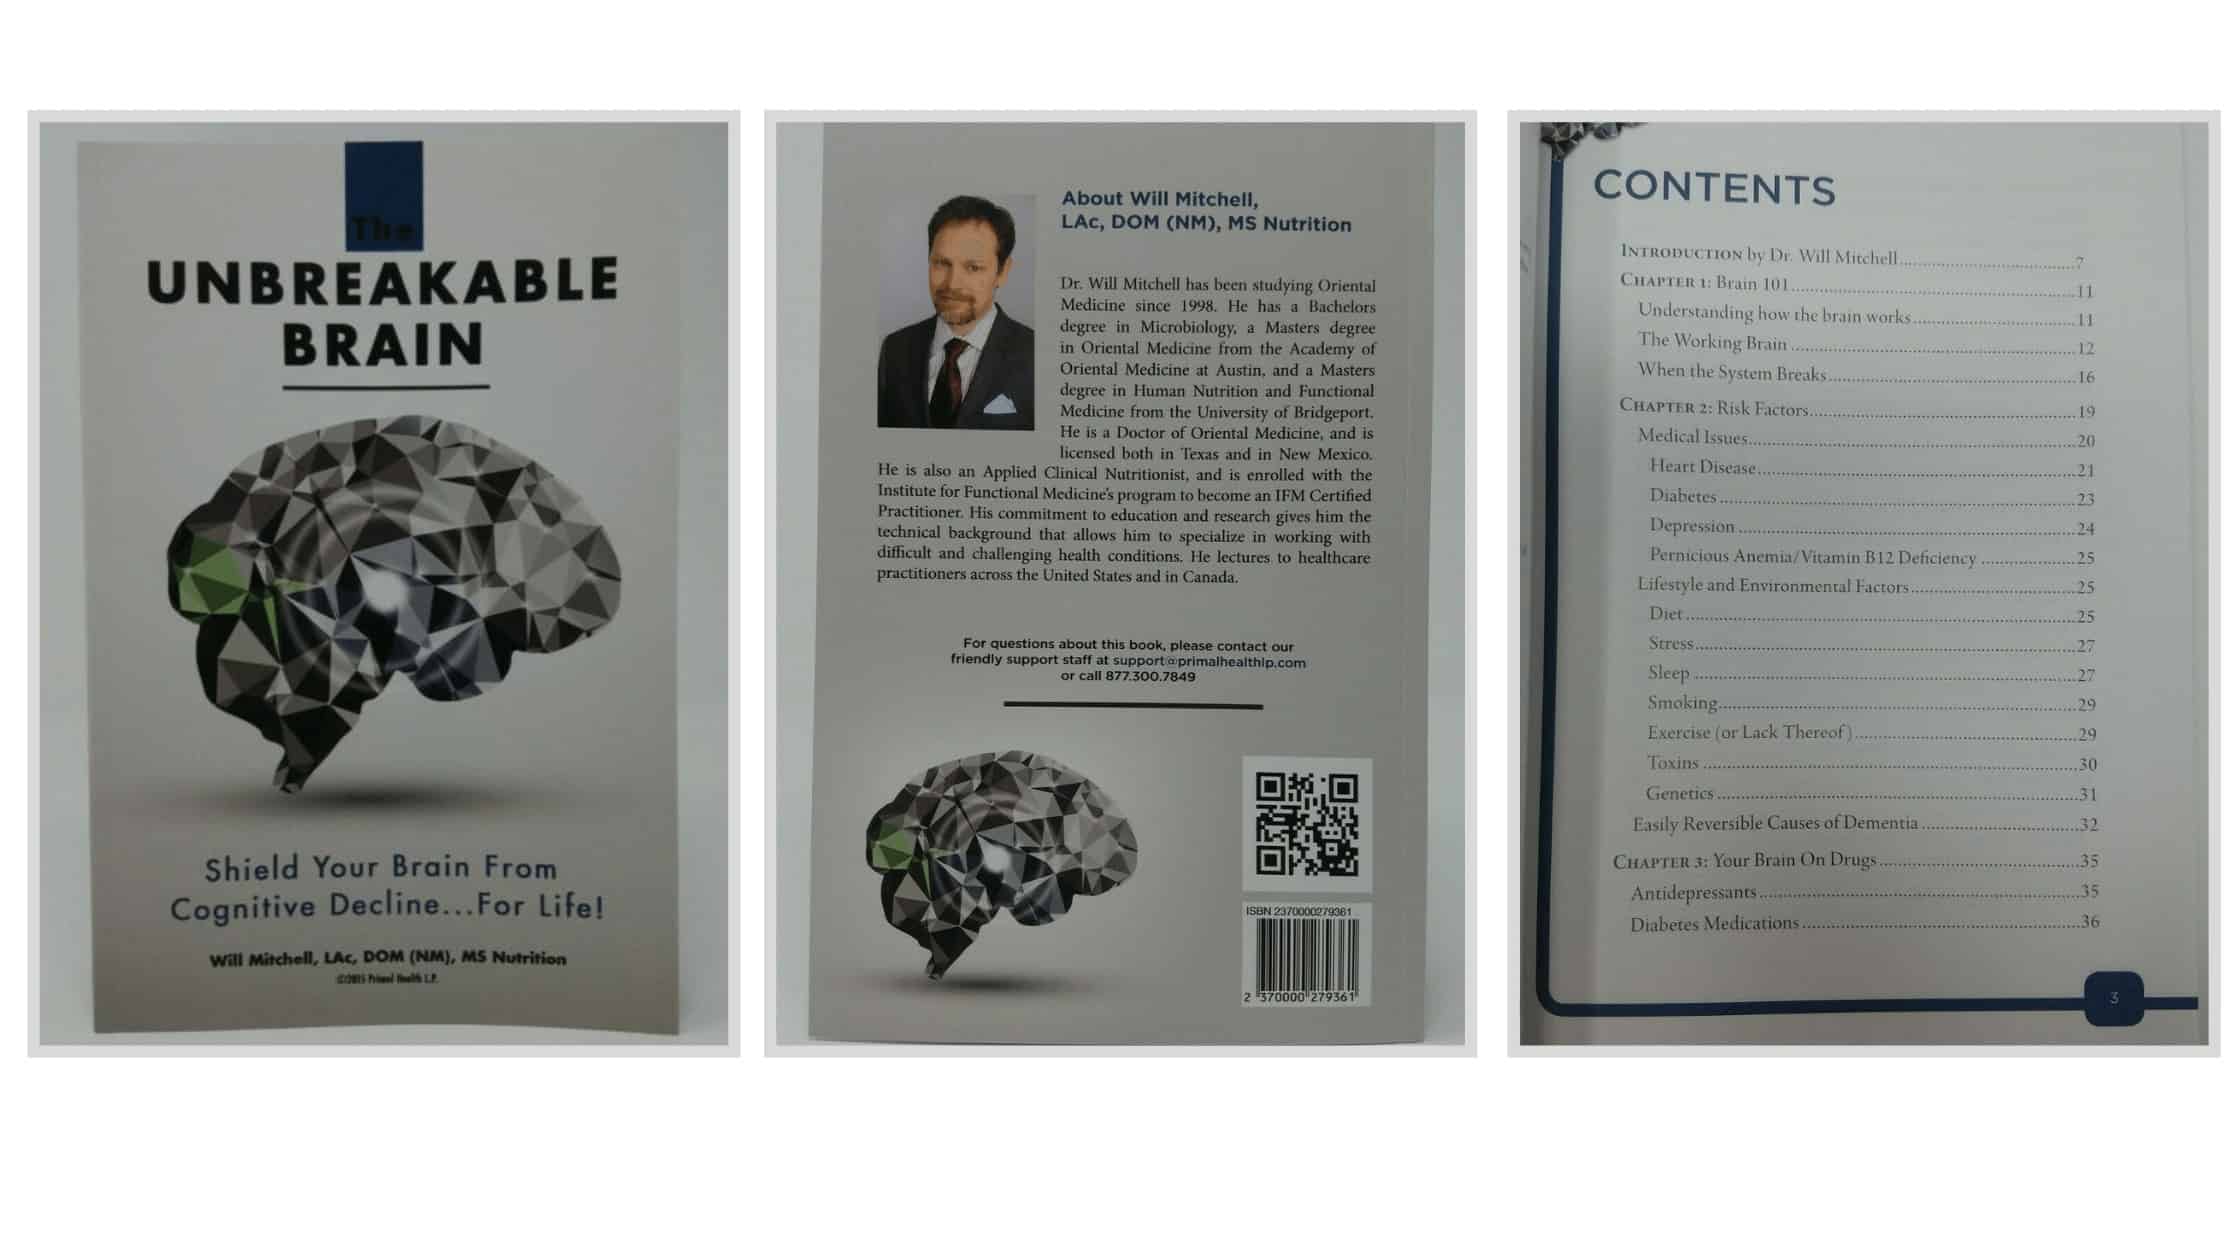 The Unbreakable Brain Book